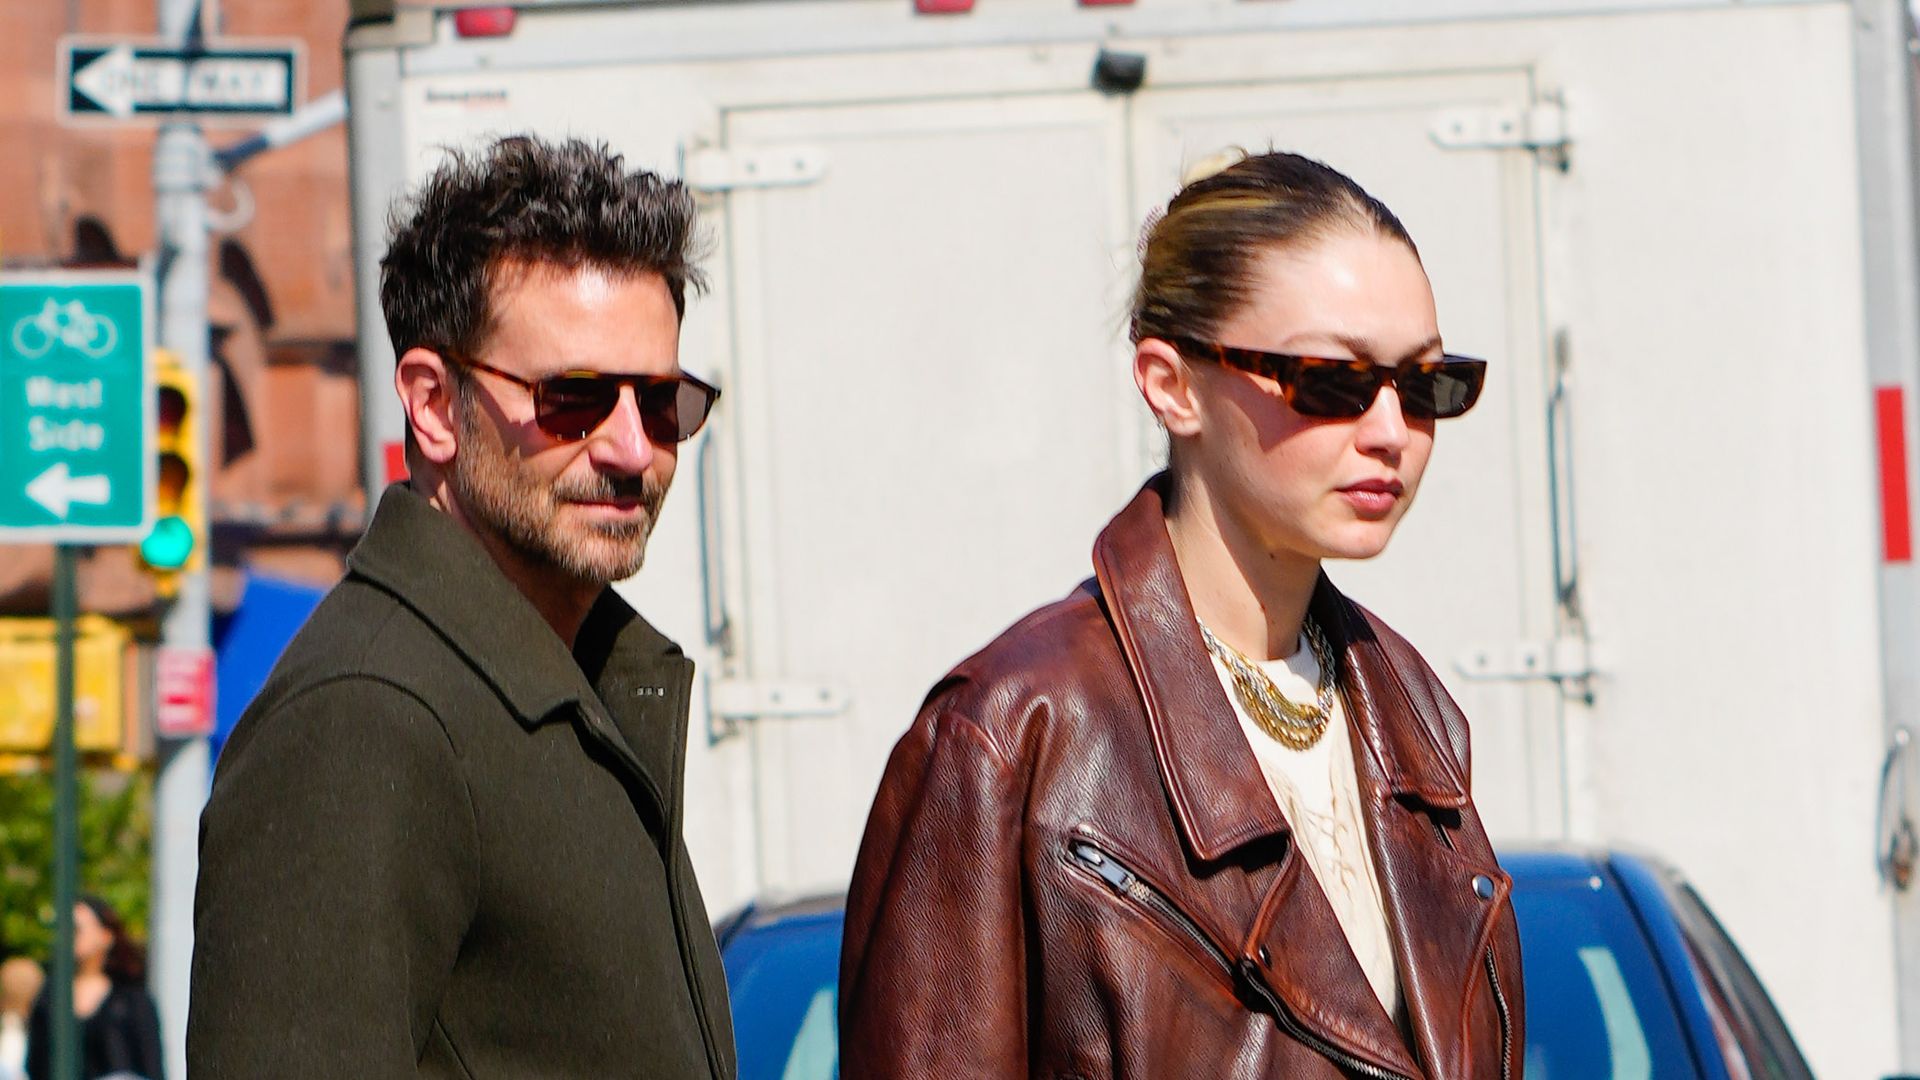 Gigi Hadid and Bradley Cooper walk in NYC